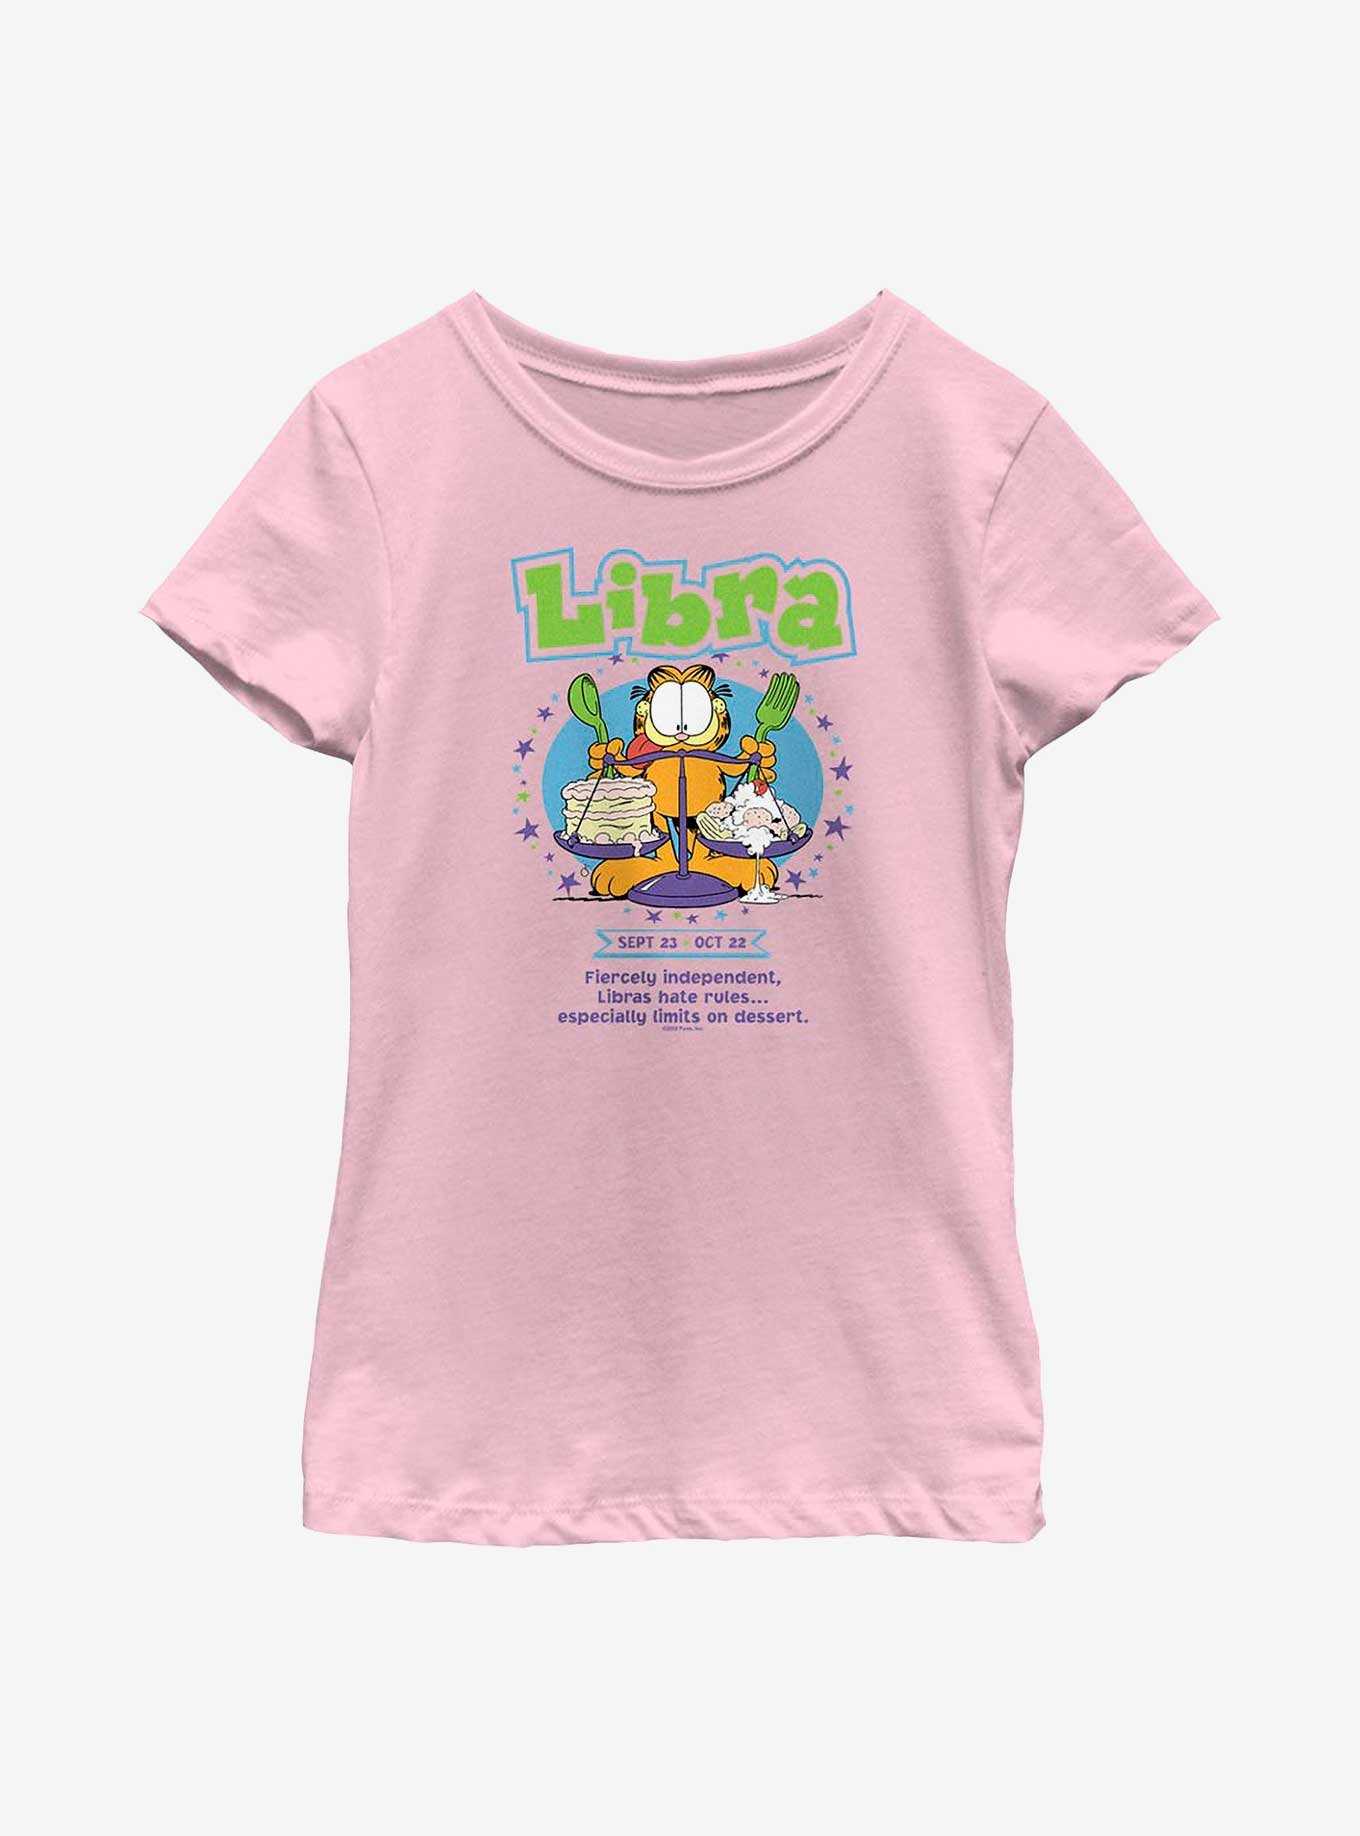 Garfield Libra Horoscope Youth Girl's T-Shirt, , hi-res